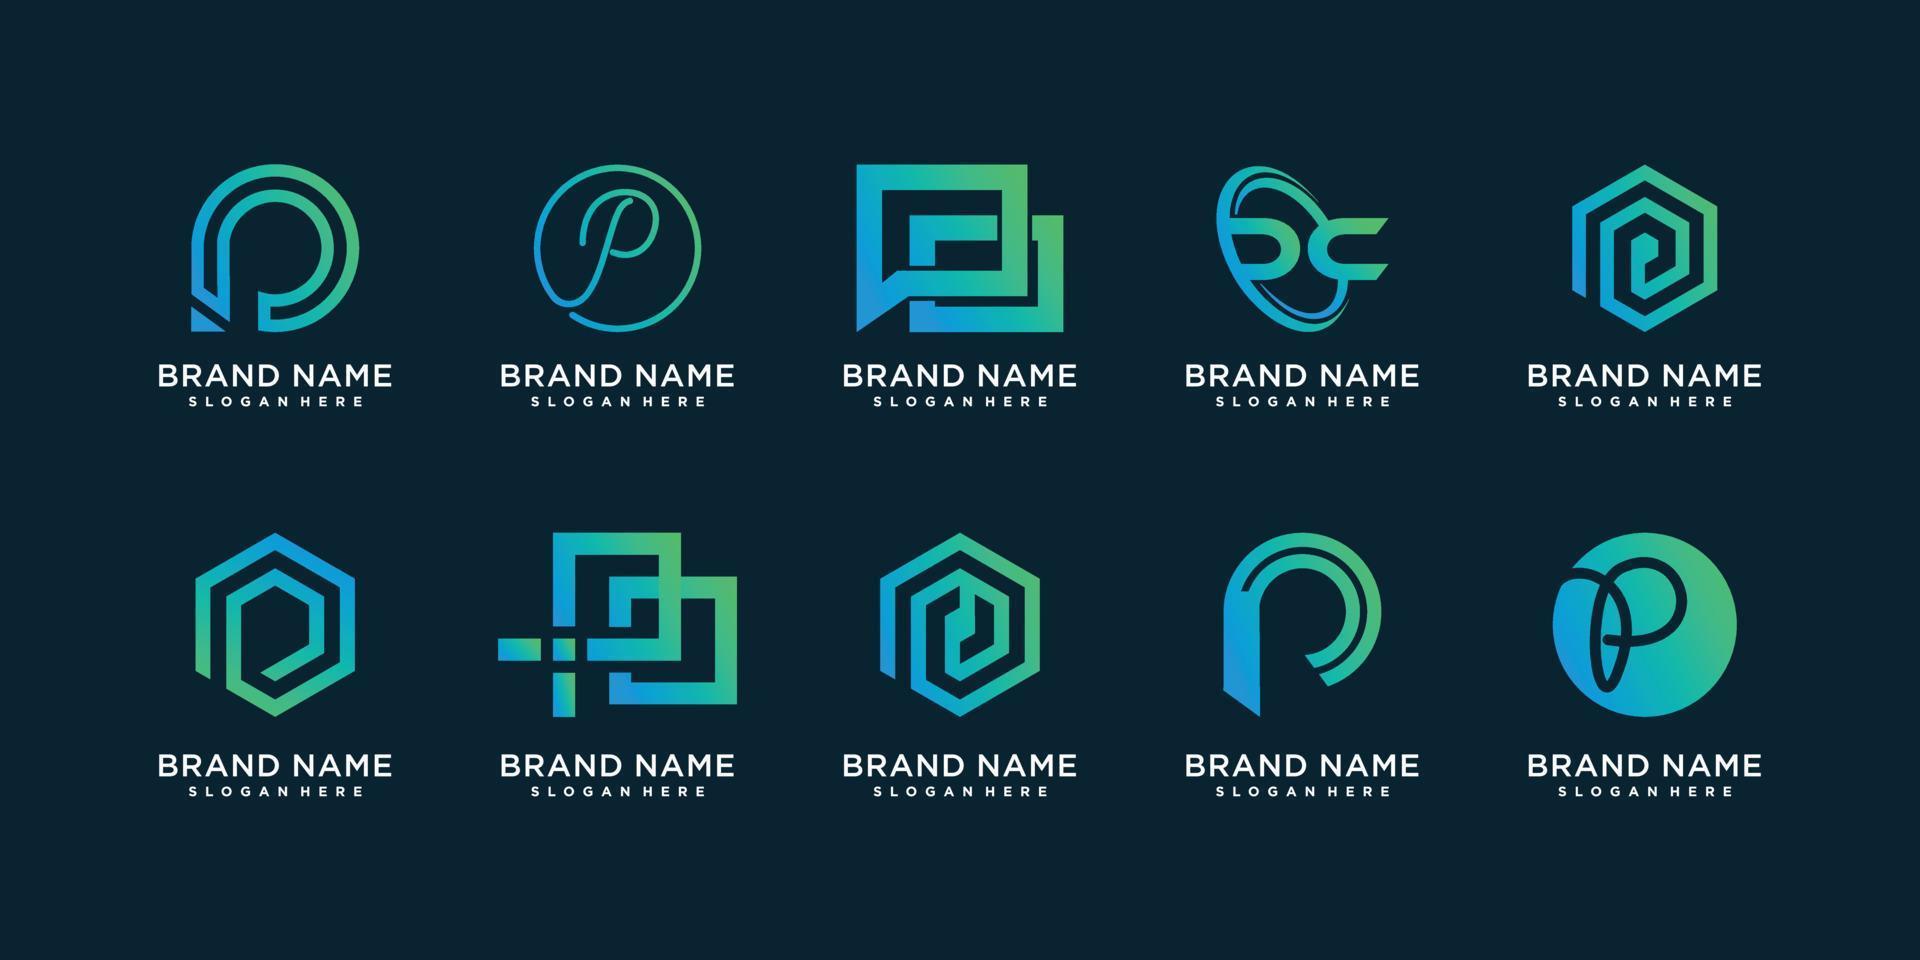 colección de logotipos p con vector premium de estilo creativo moderno